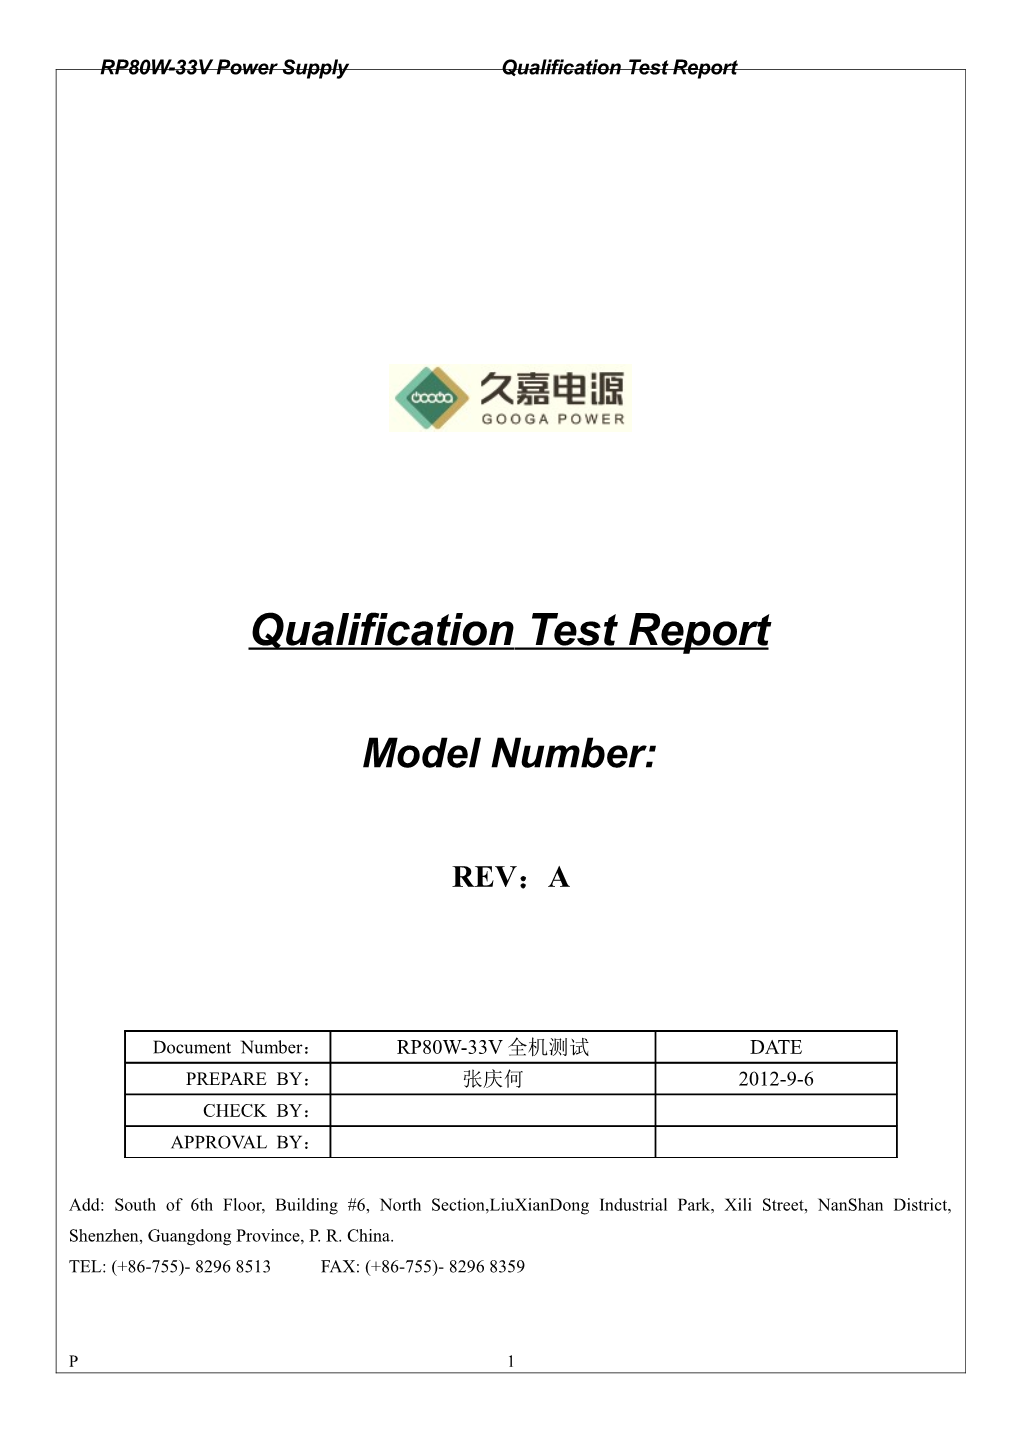 Qualification Test Report